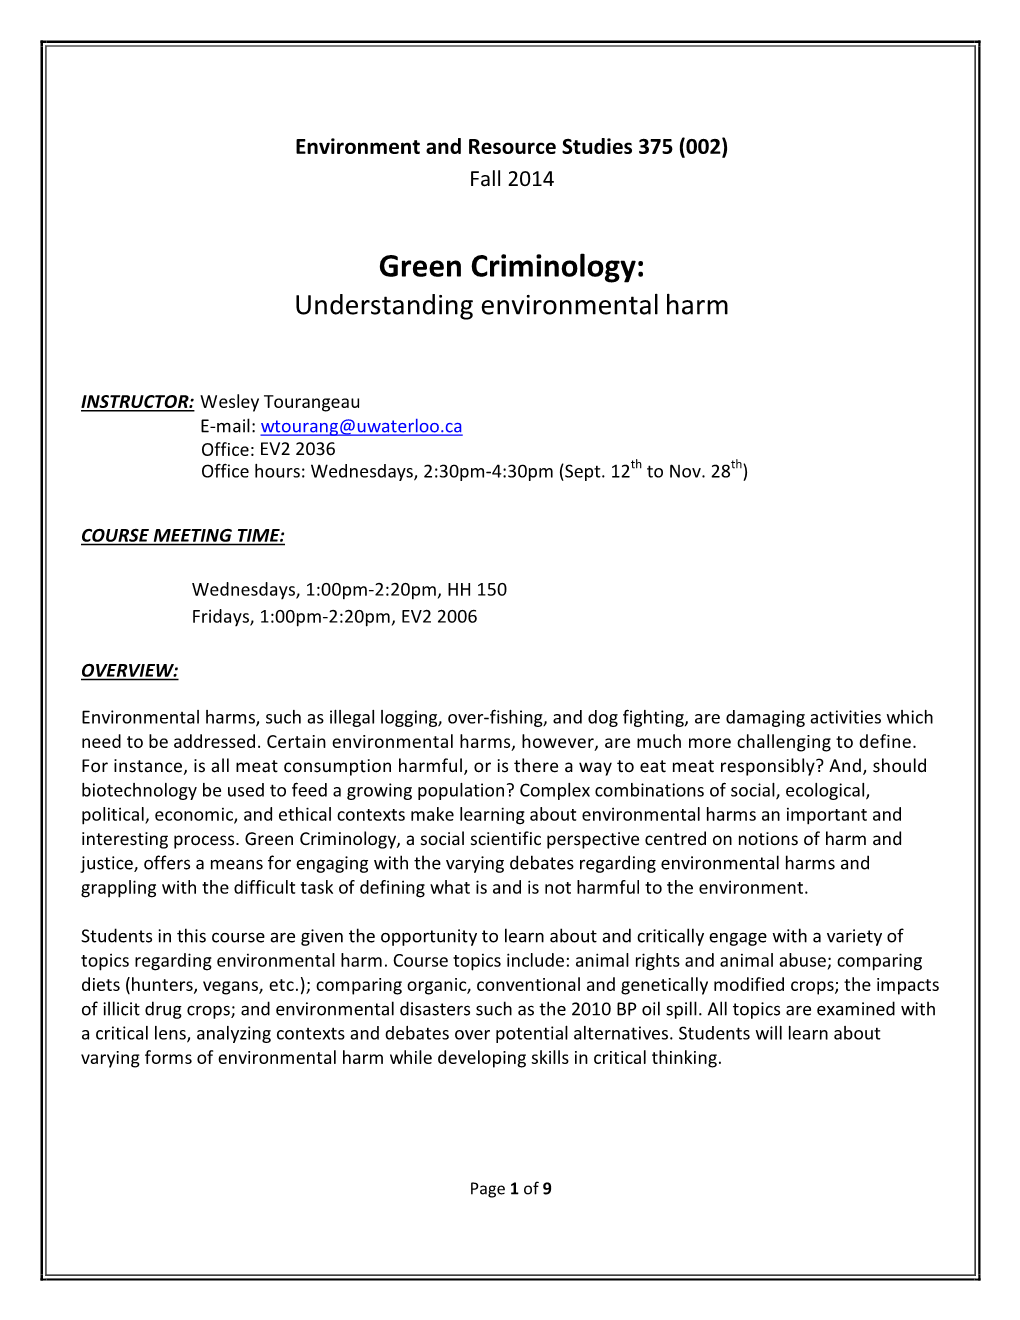 Green Criminology: Understanding Environmental Harm